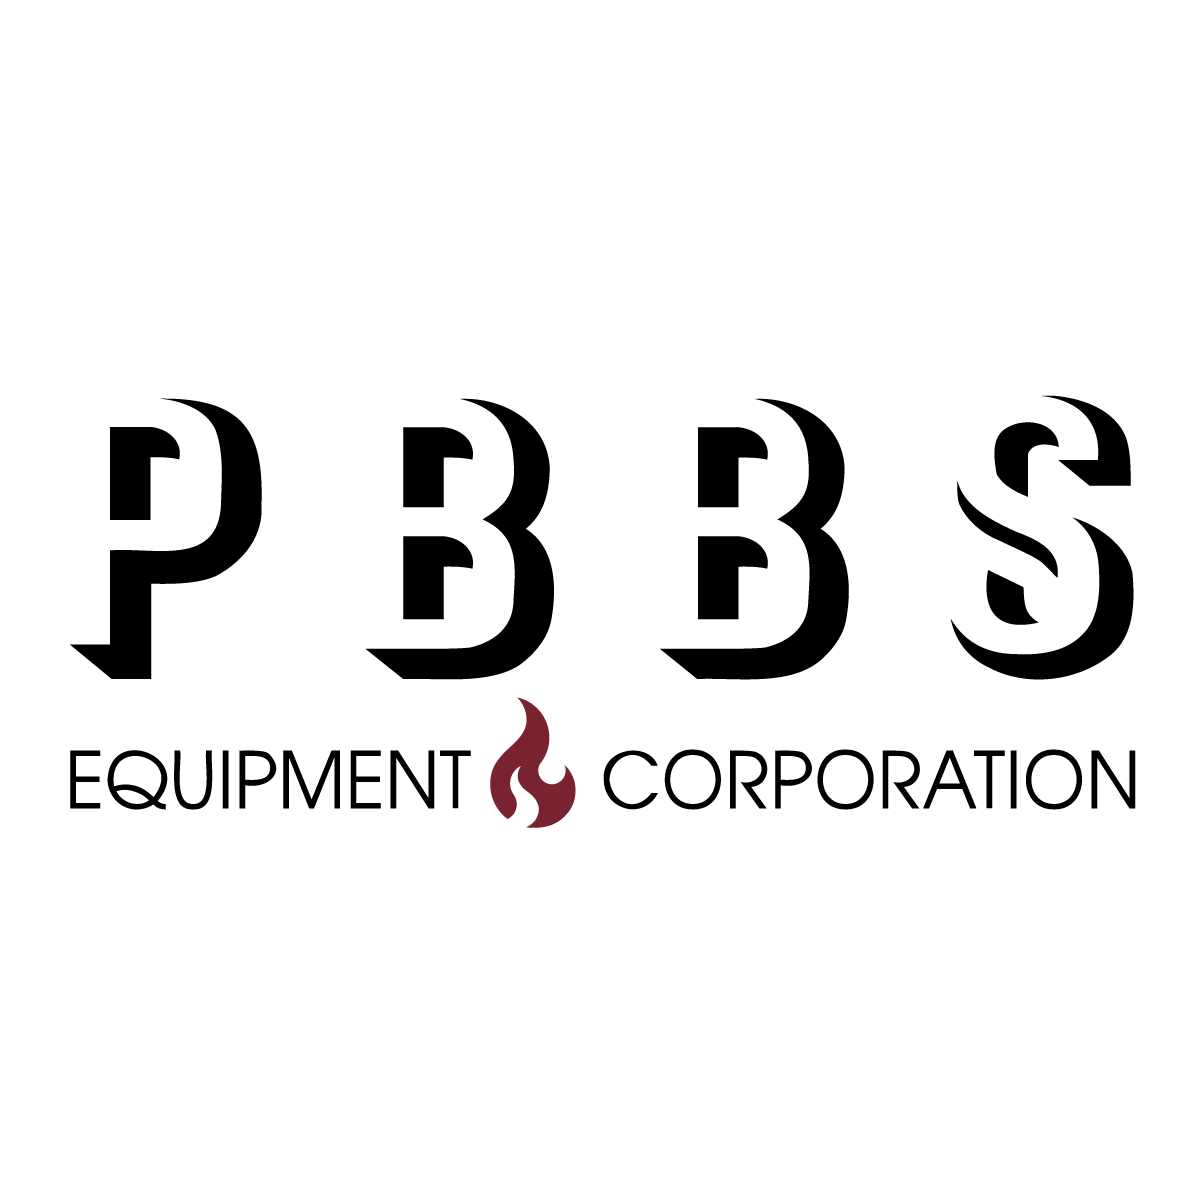 PBBS Equipment Corporation Logo